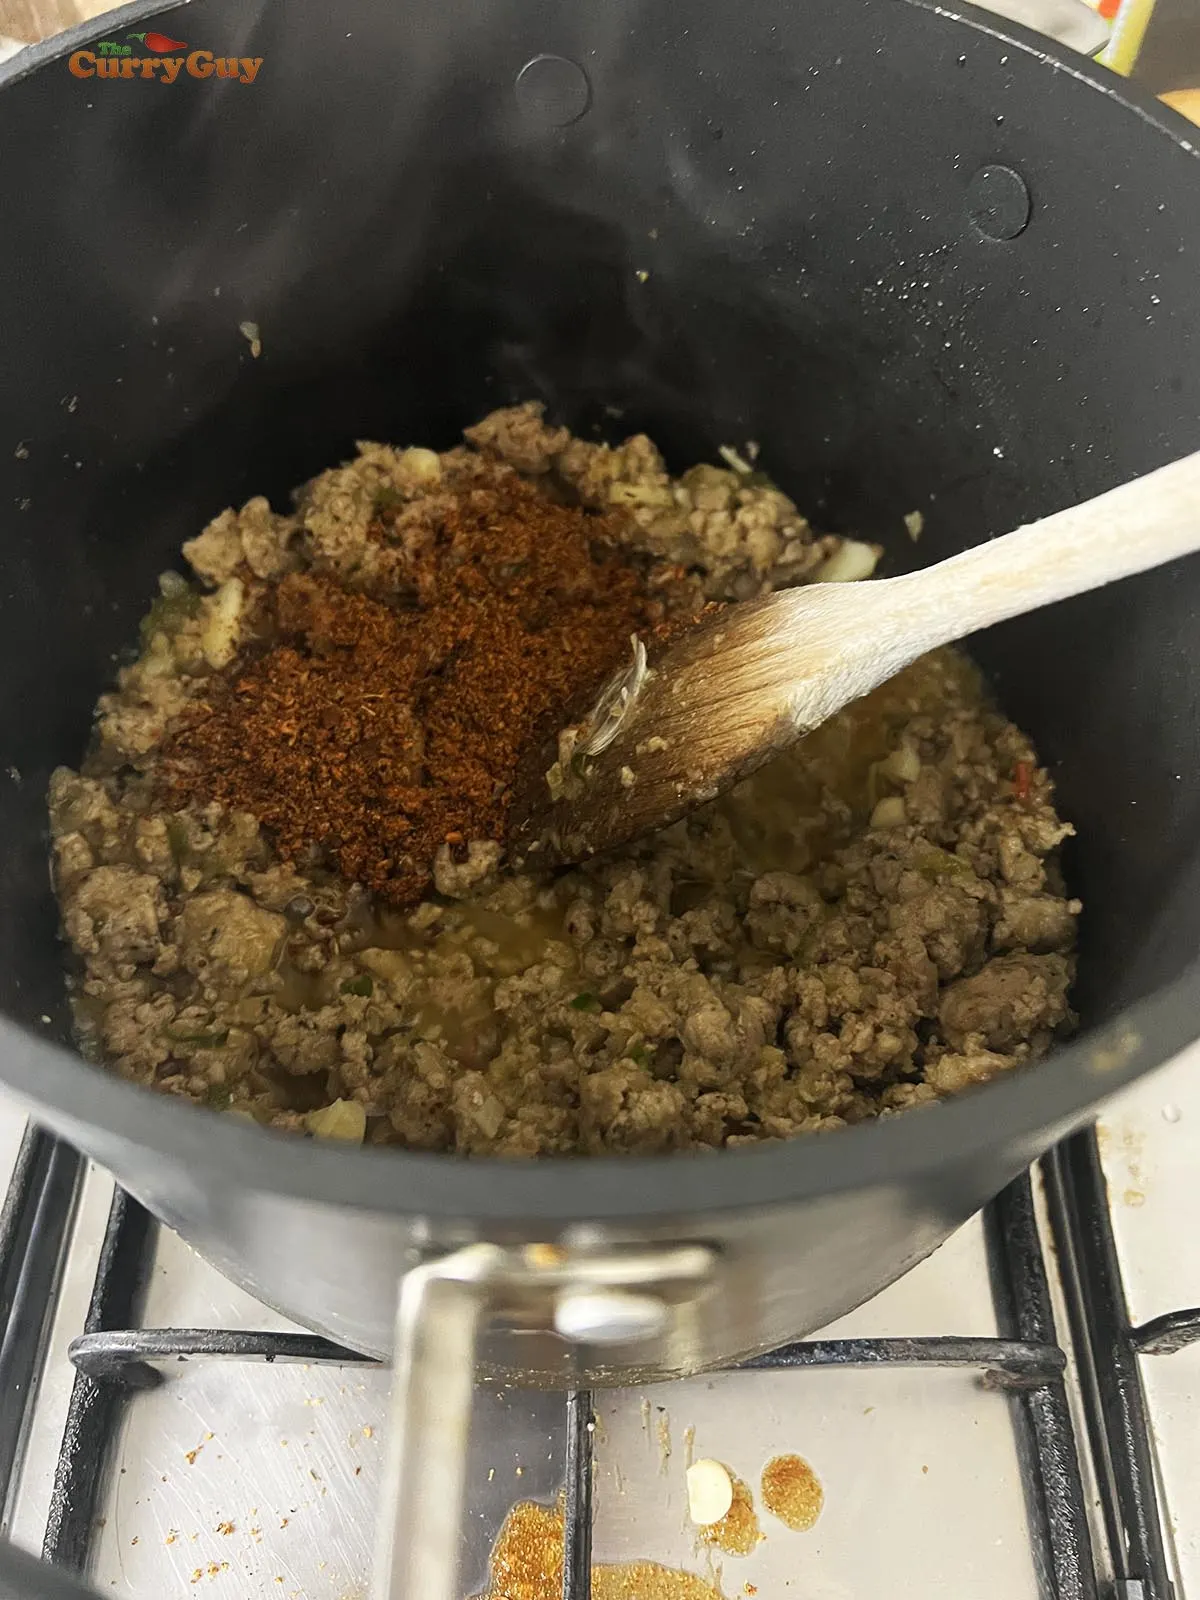 Adding garlic and Cajun spice powder to the pan.